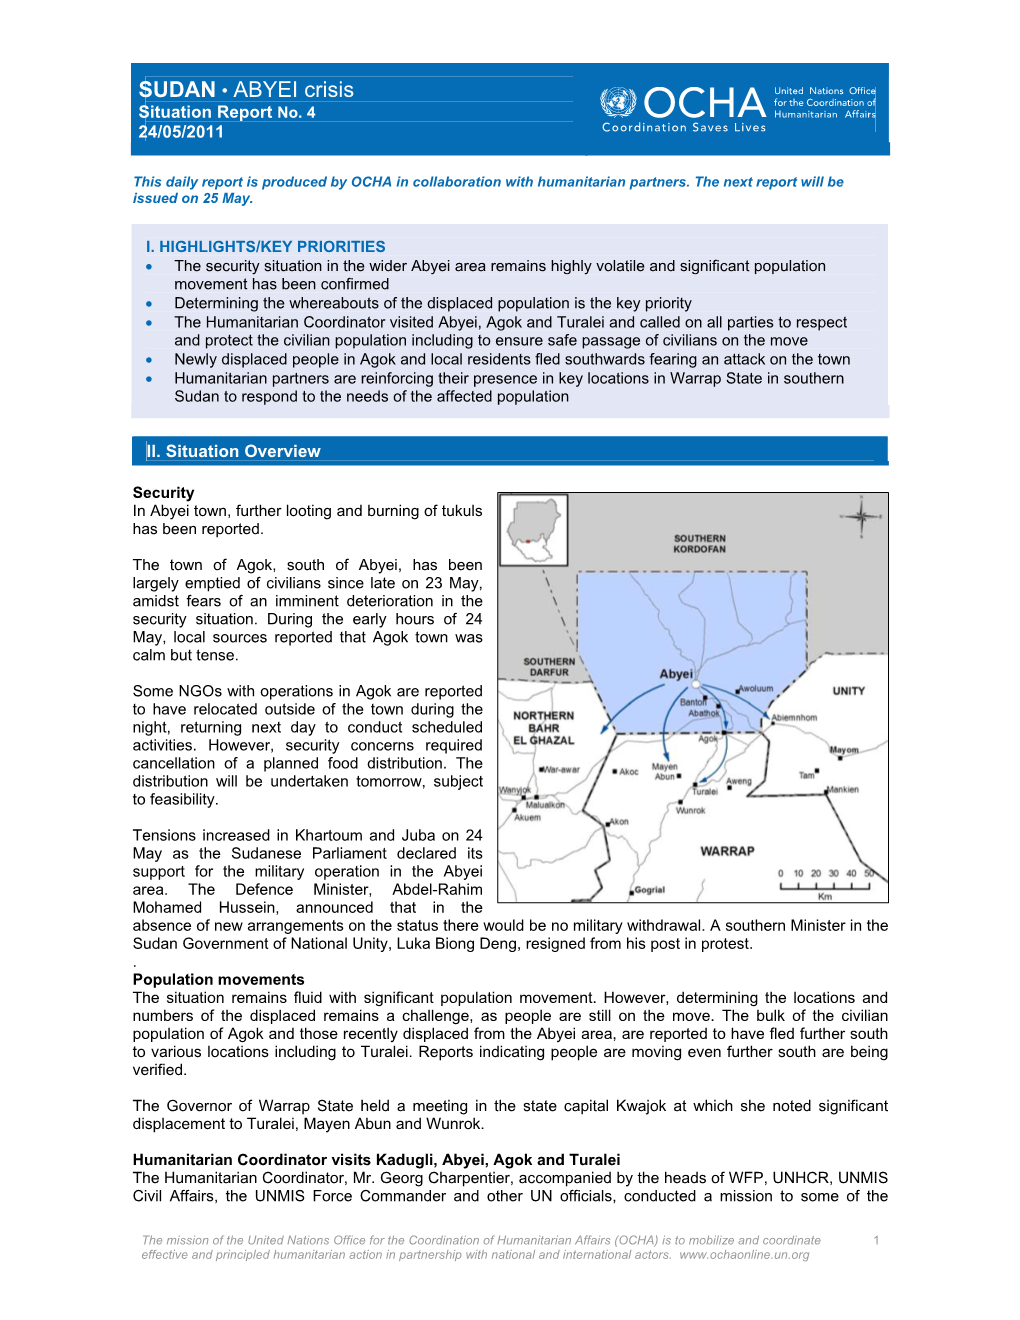 SUDAN • ABYEI Crisis Situation Report No